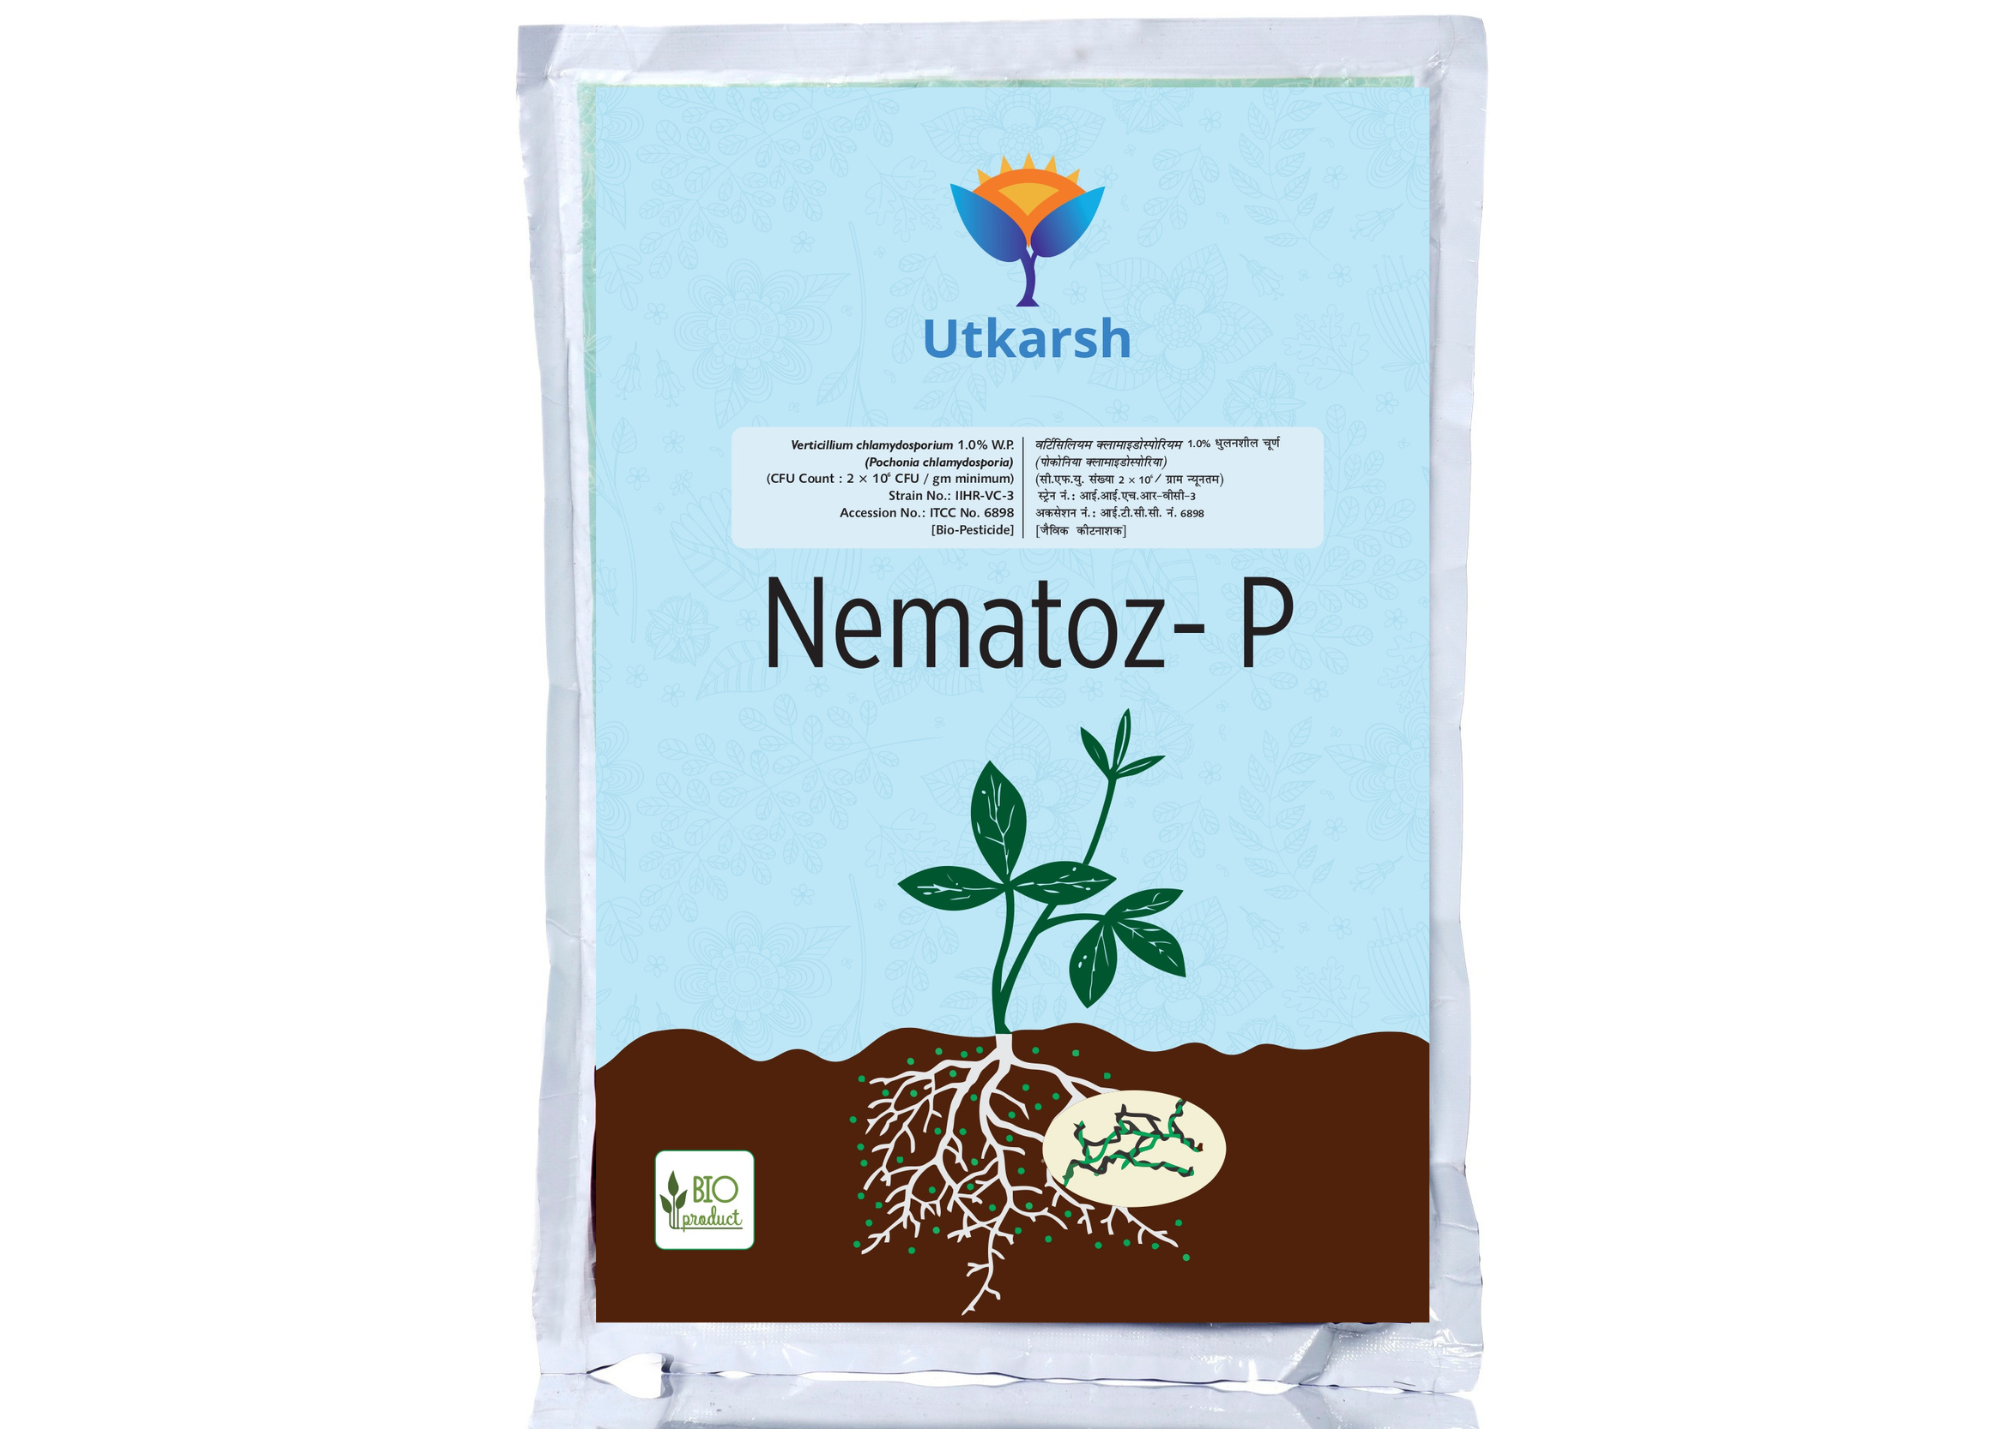 Utkarsh Nematoz-P | Verticillium Chlamydosporium (Pochonia Chlamydosporia) 1.0% W.P 2 x 10^6 CFU/gm min. | Bio Nematicide